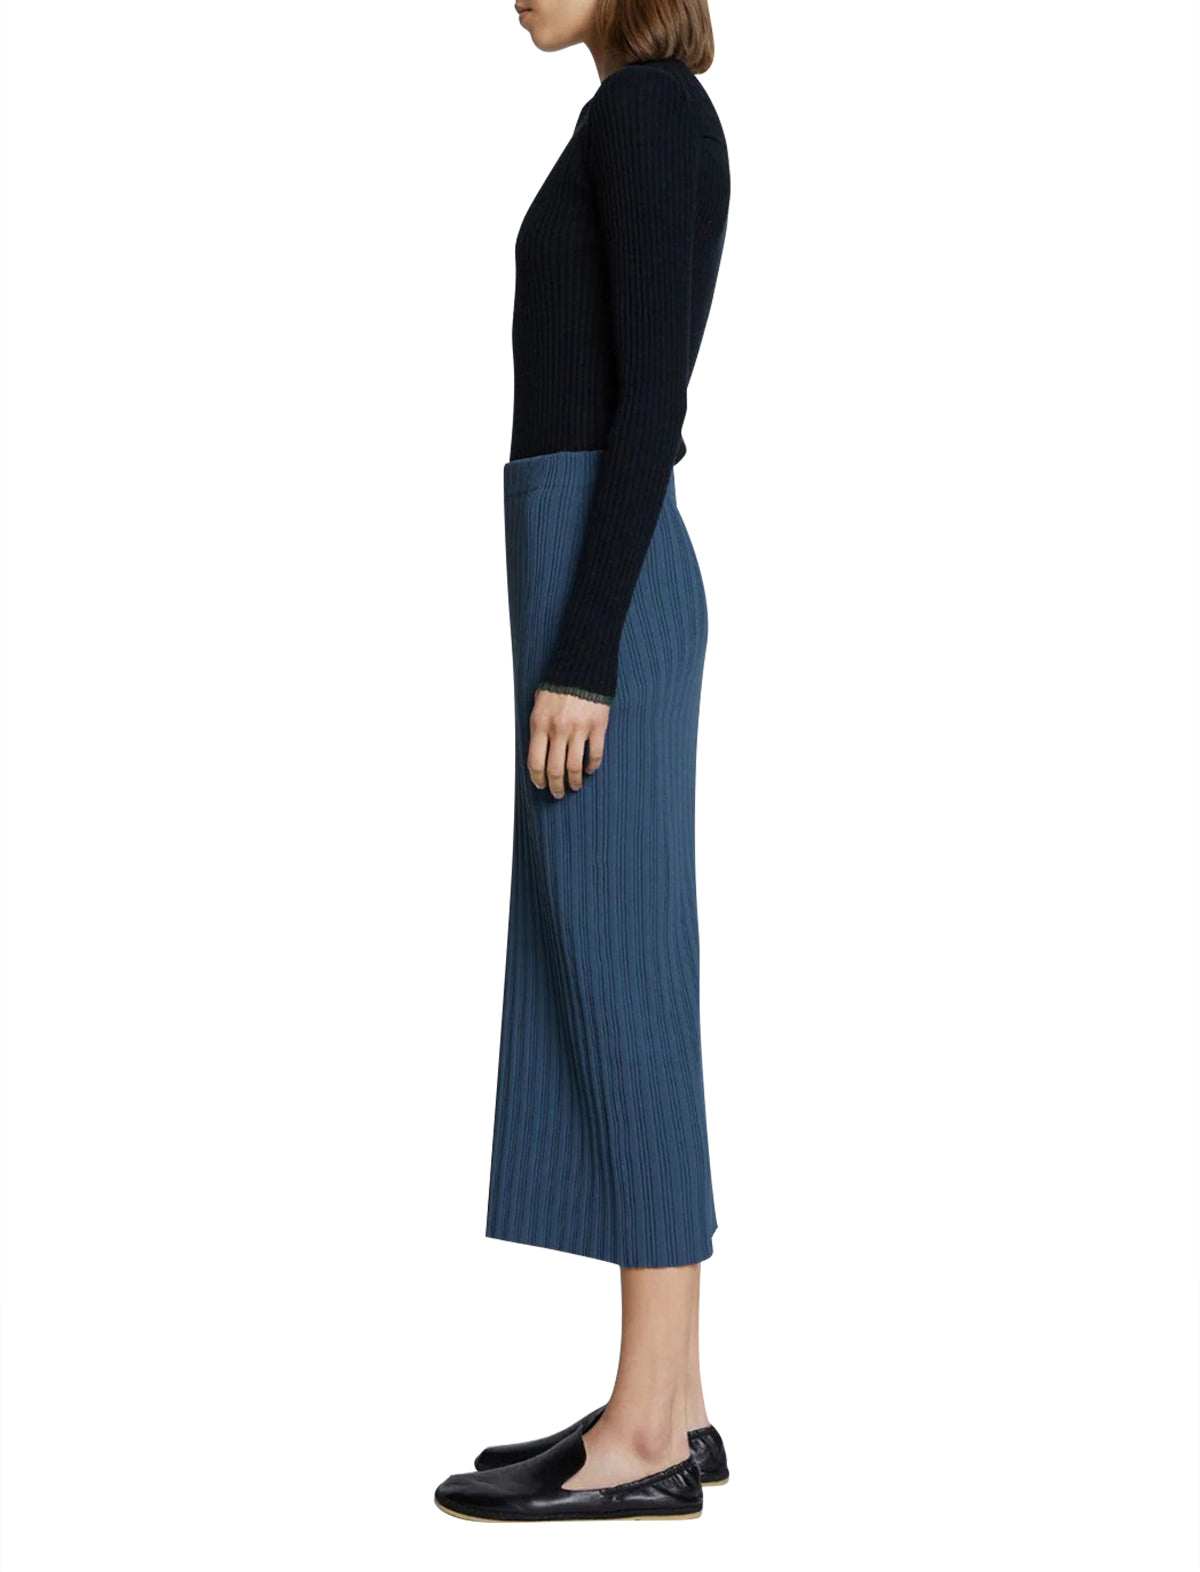 PROENZA SCHOULER WHITE LABEL Rib Knit Skirt in Dark Blue